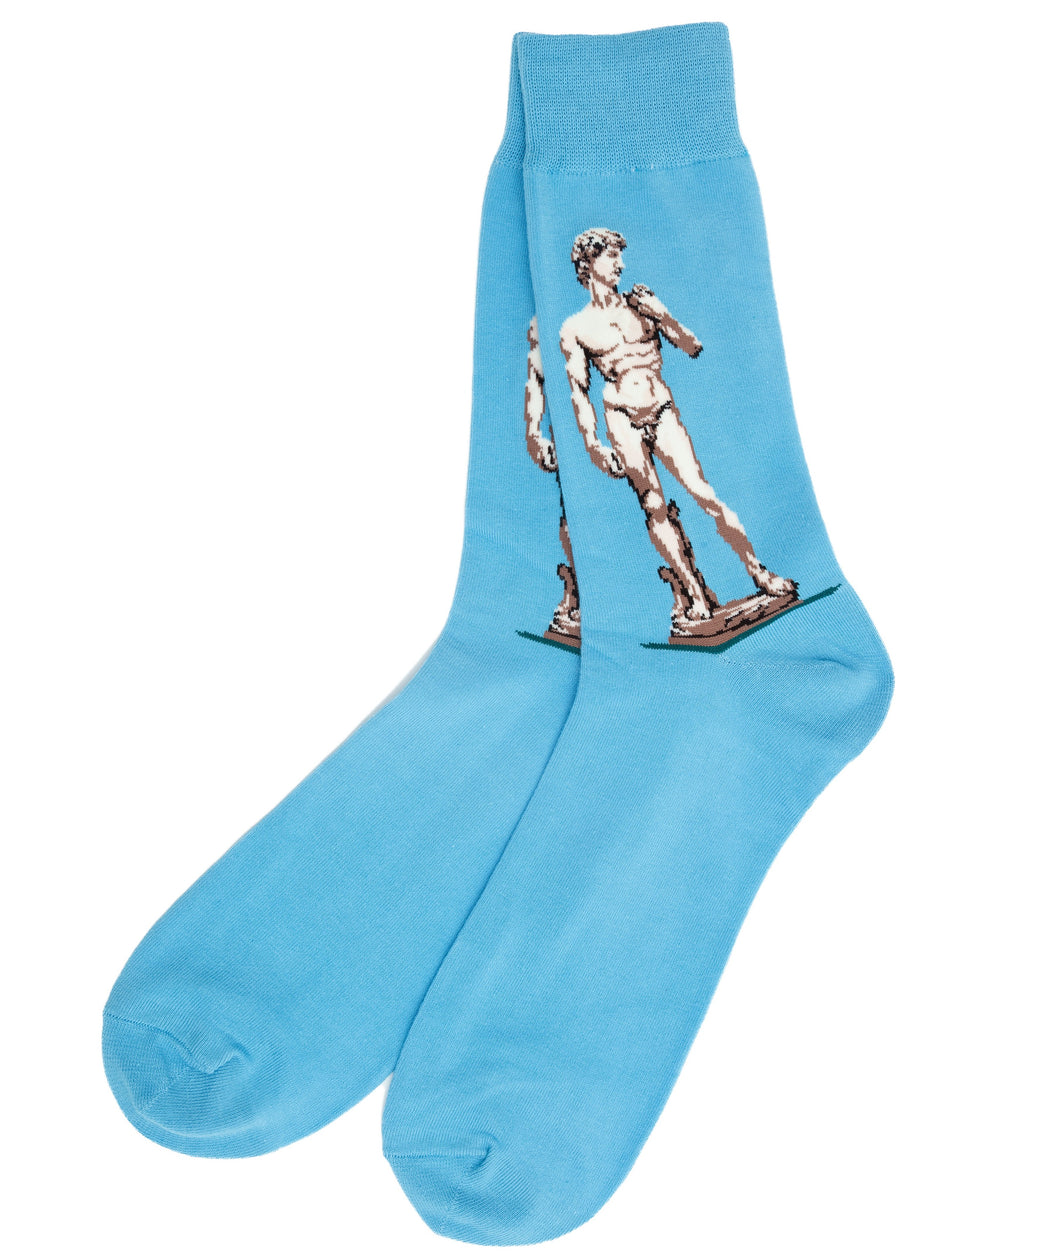 david sculpture socks